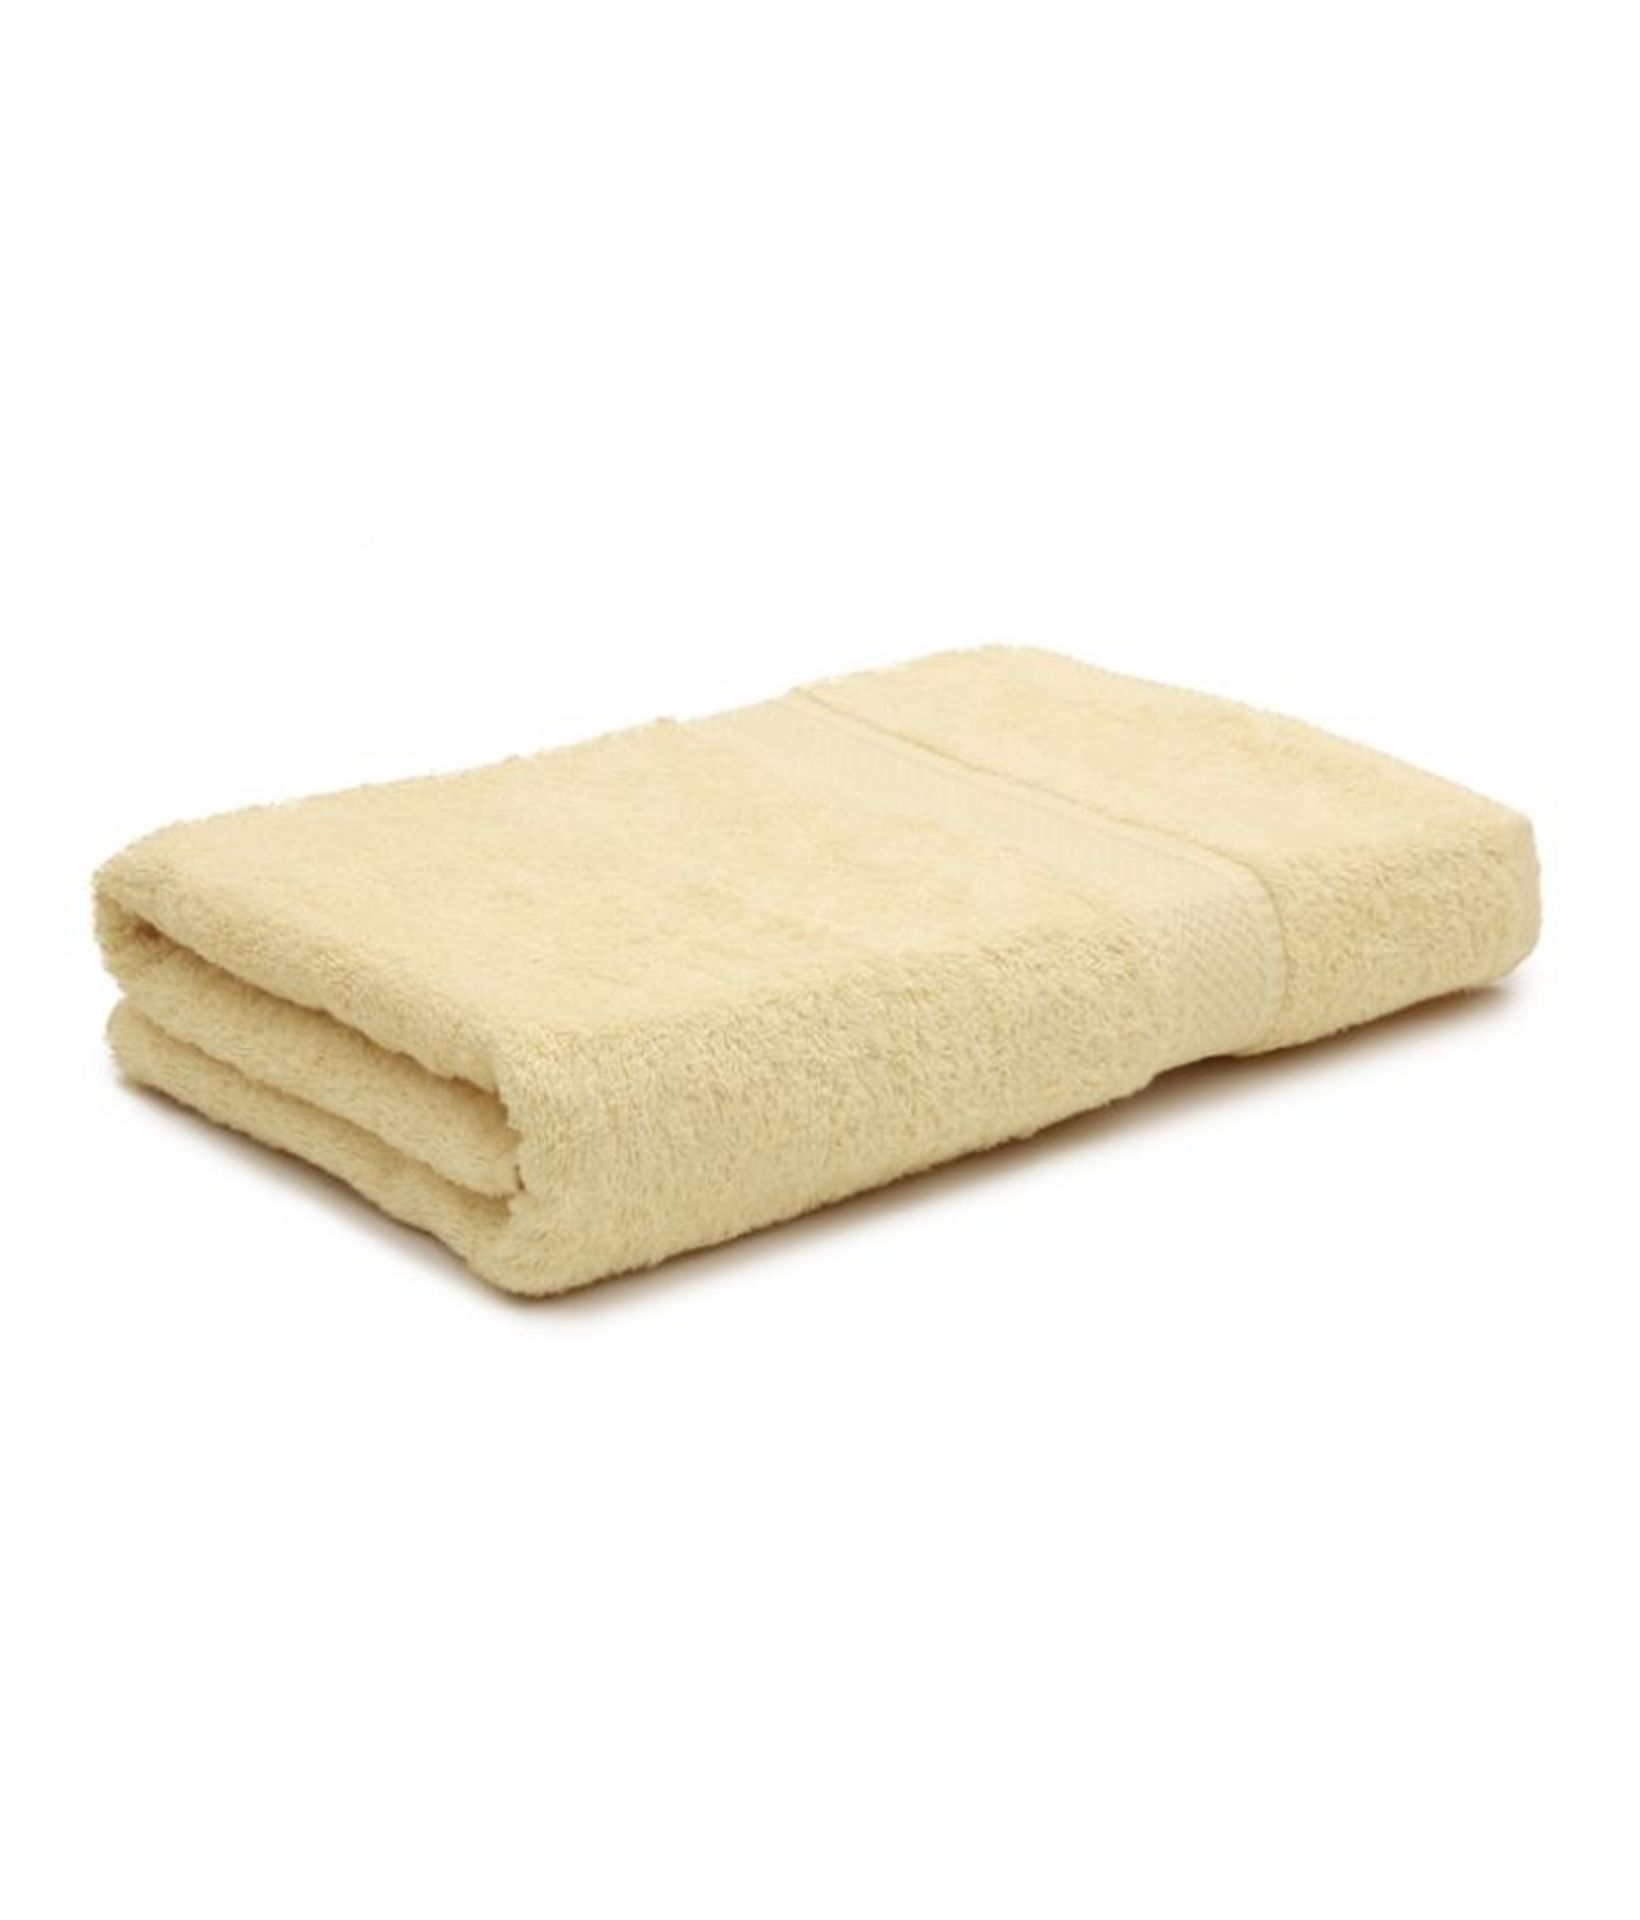 V *TRADE QTY* Brand New 100% Cotton Bath Towel 125 x 70 cm - Cream X 60 YOUR BID PRICE TO BE